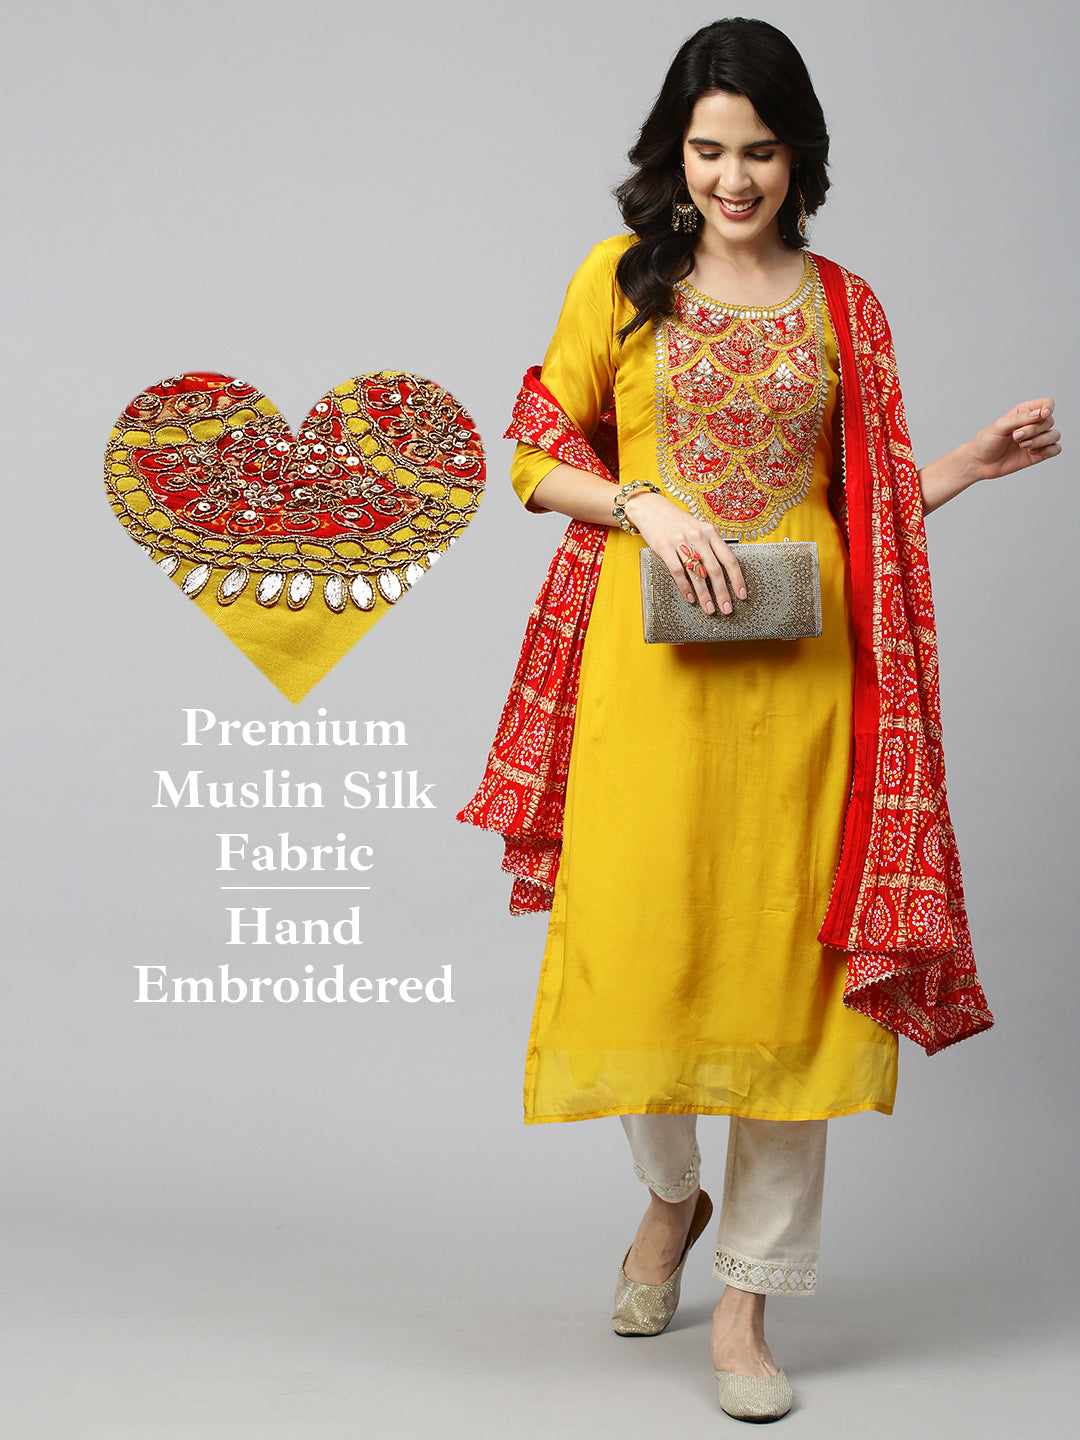 Festive Embroidered Kurta and Bandhani Dupatta - Festive Yellow